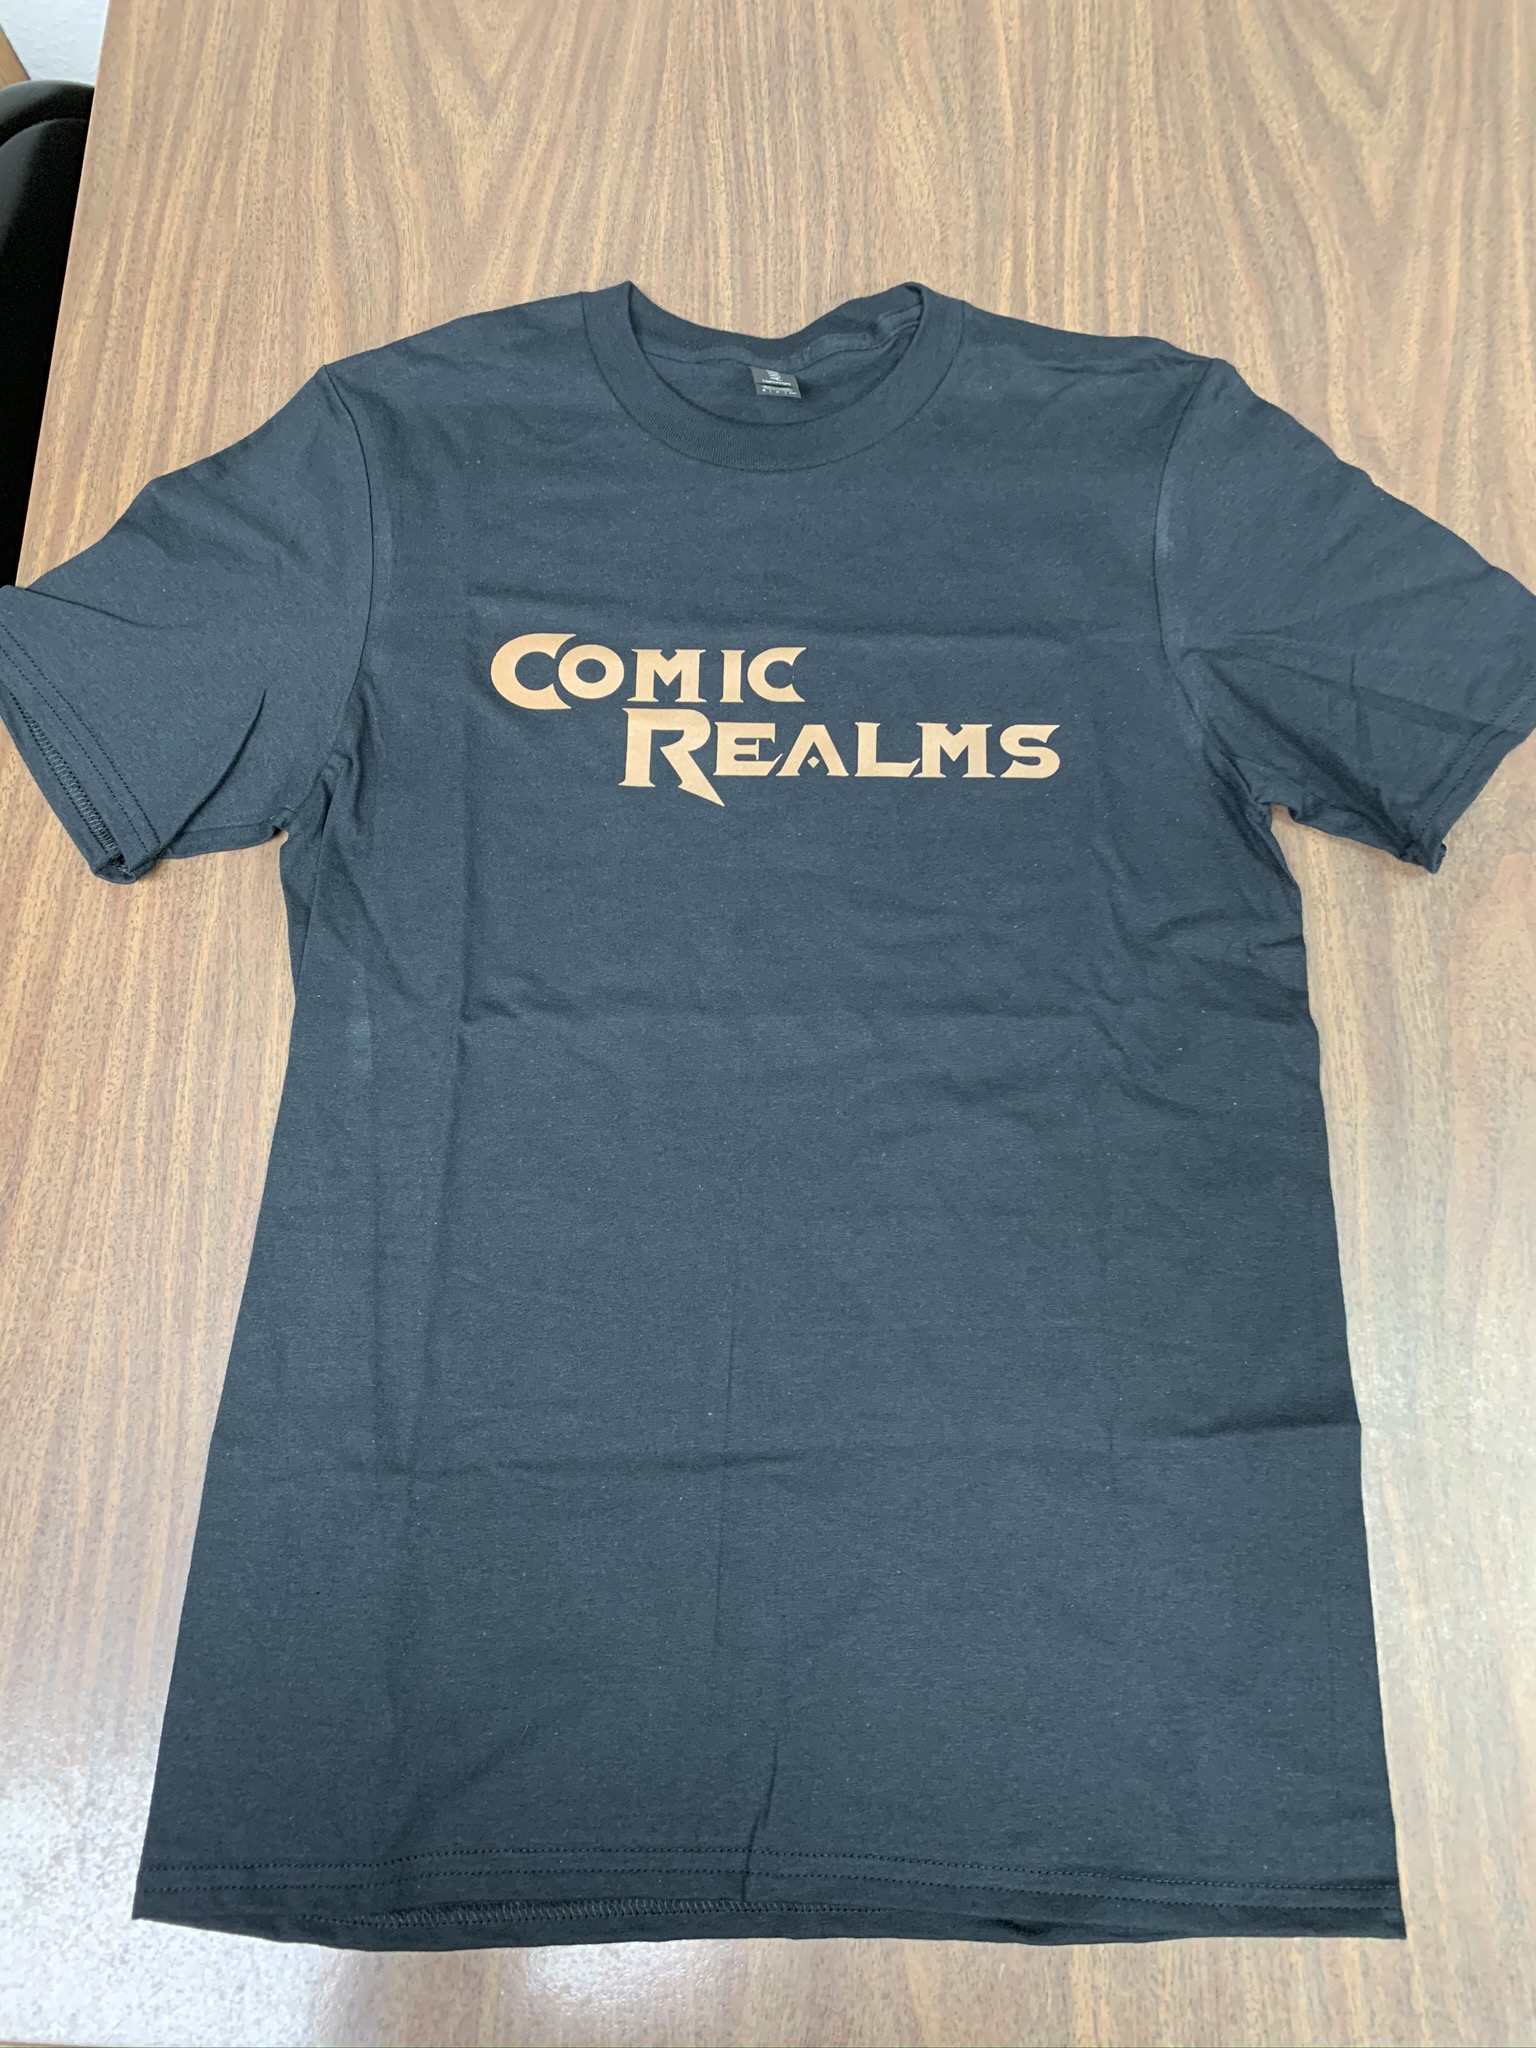 Comic Realms T-Shirt Small Black/Copper